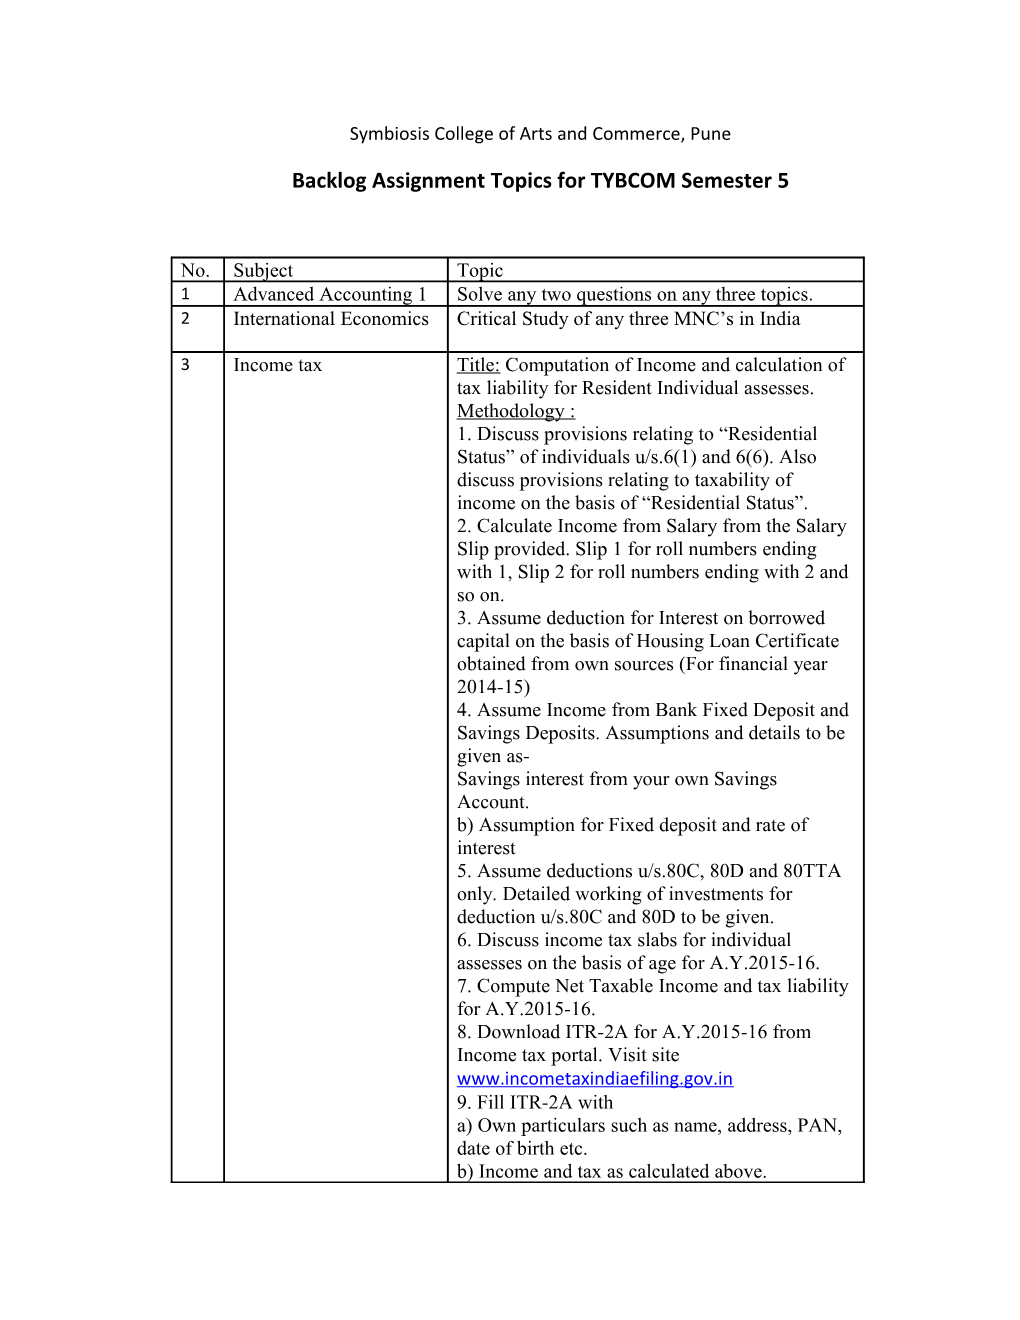 Backlog Assignment Topics for TYBCOM Semester 5